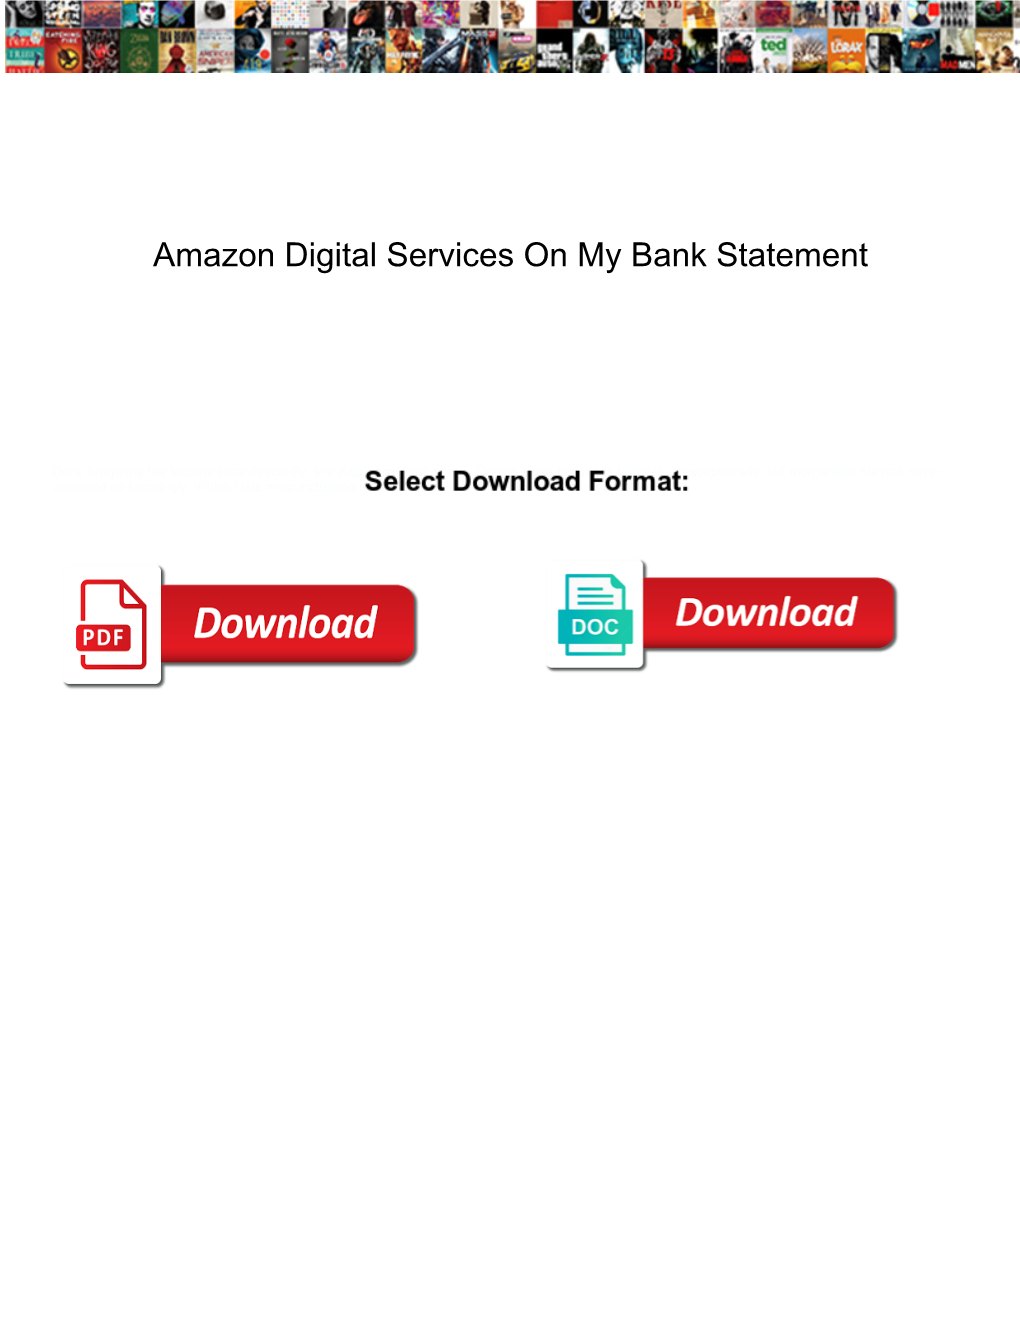 Amazon Digital Services on My Bank Statement